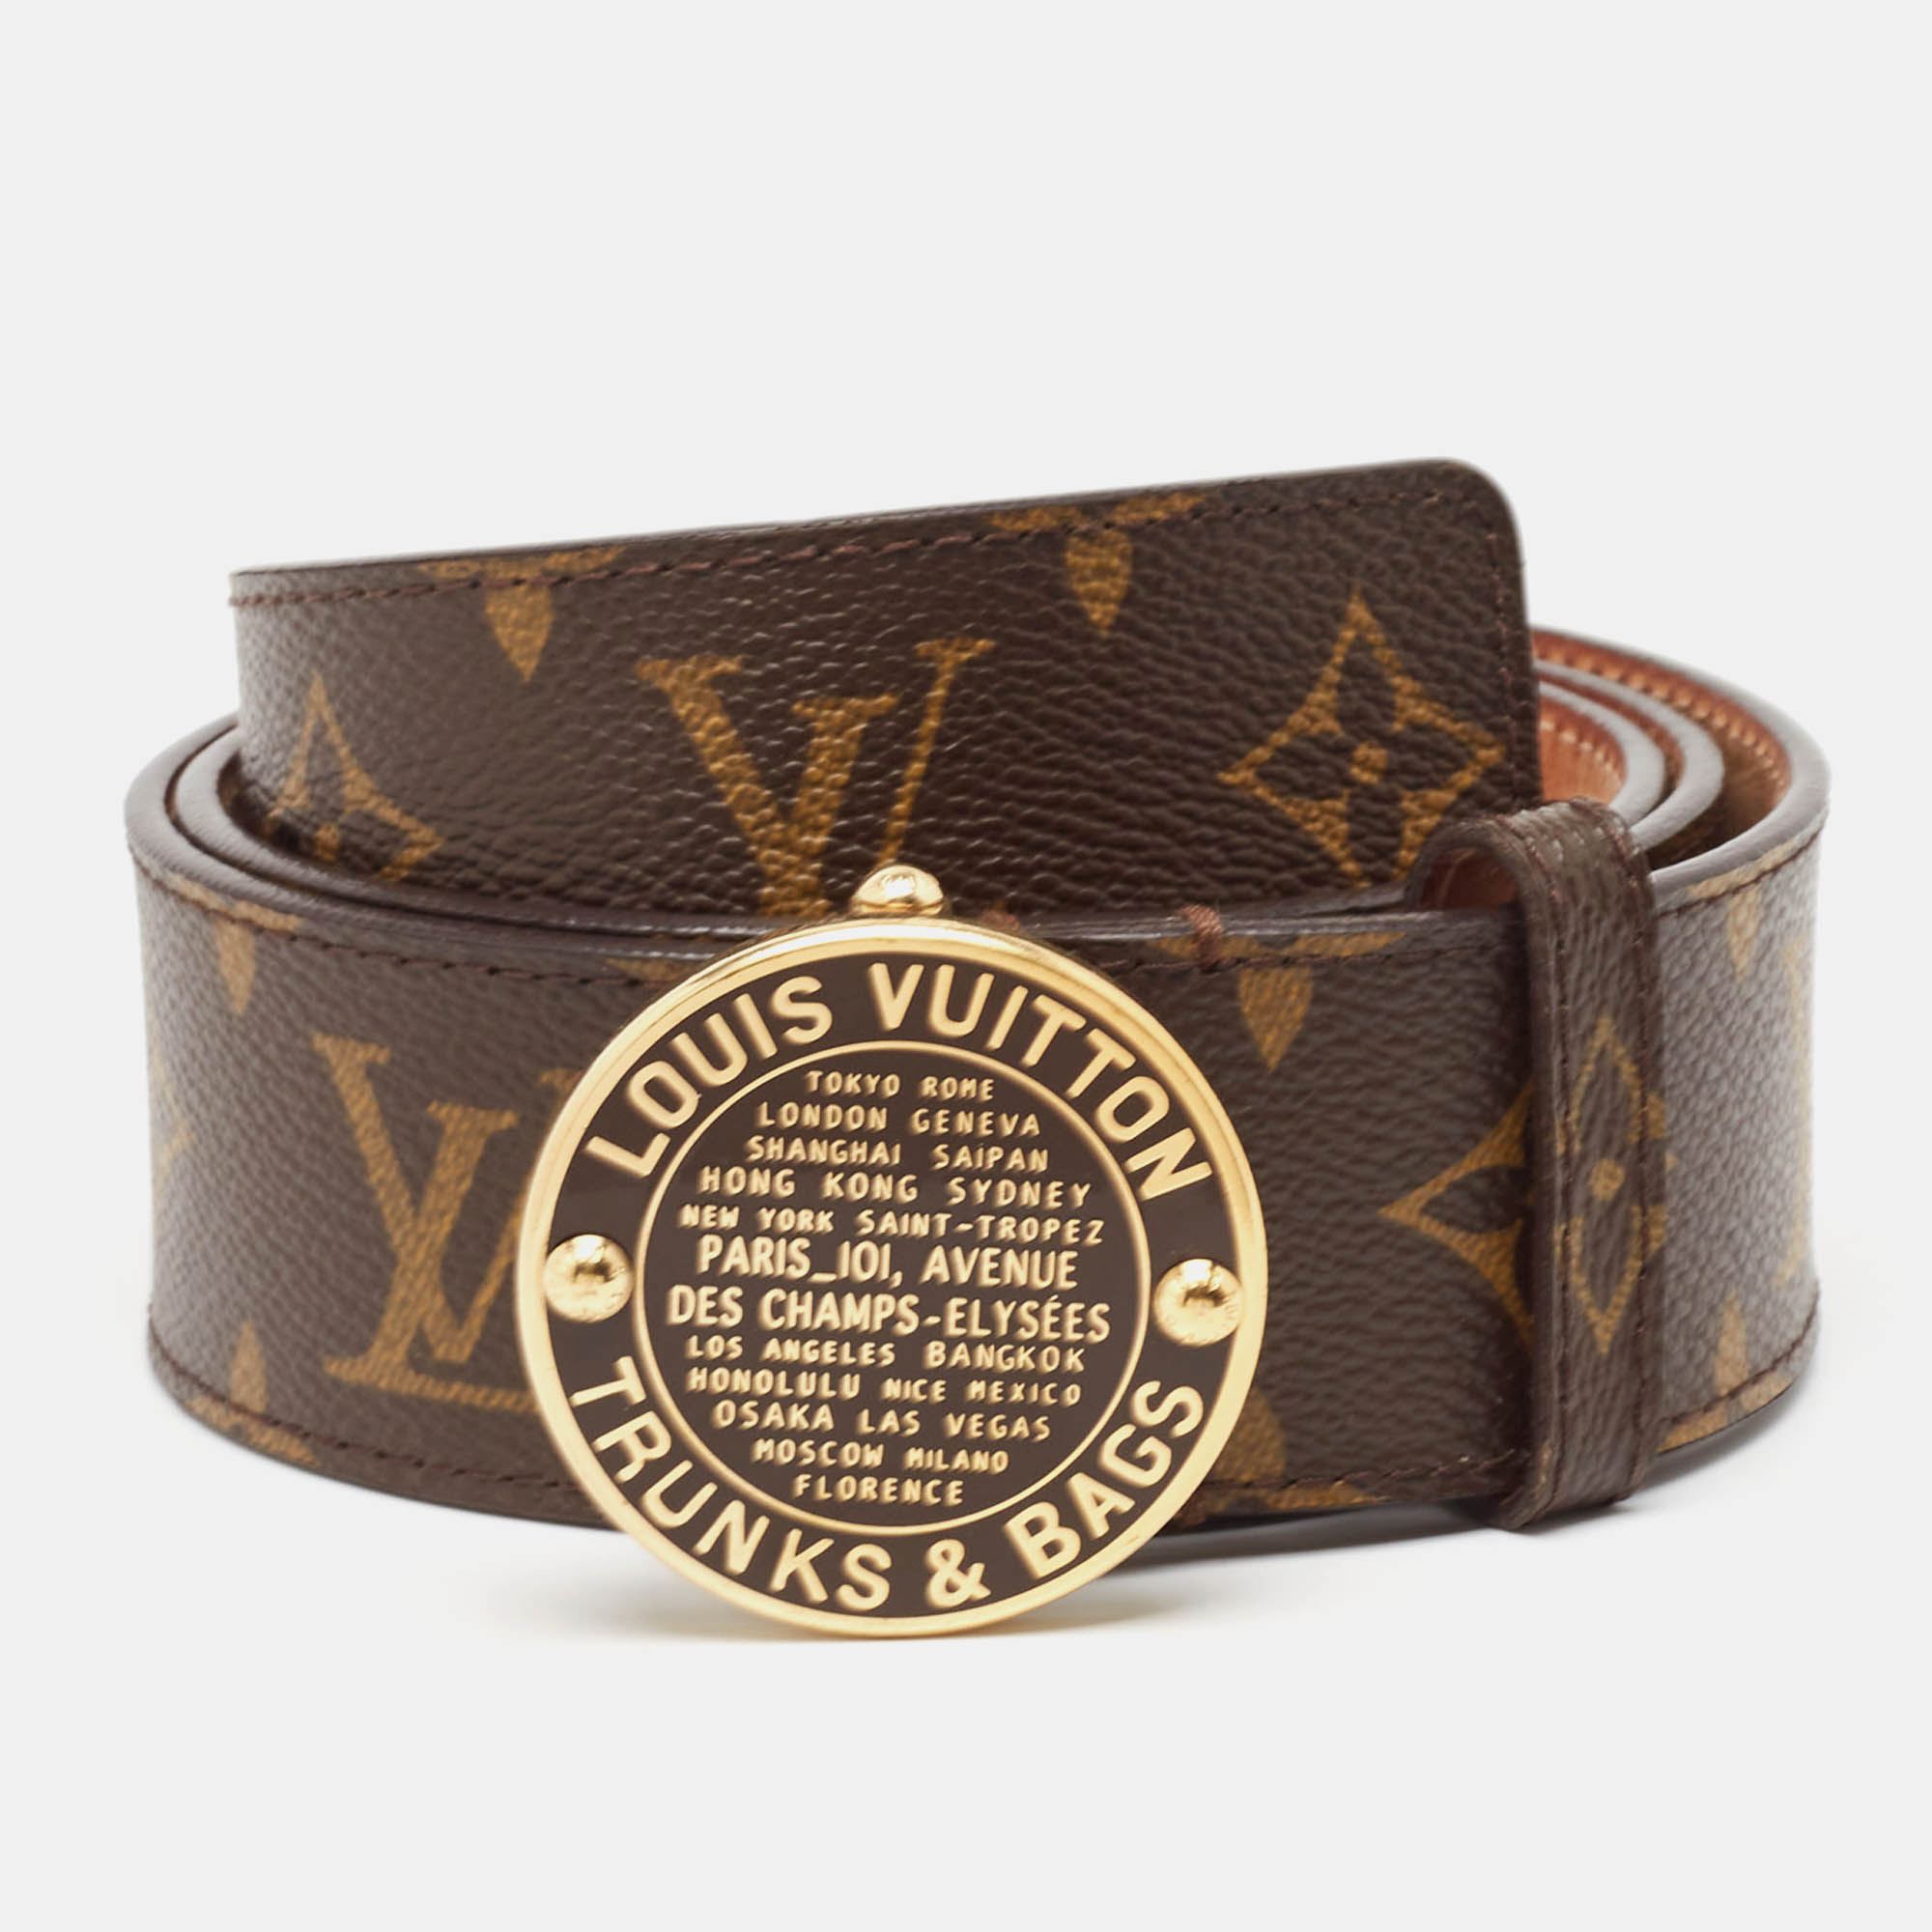 

Louis Vuitton Monogram Canvas Trunks and Bags Belt Spain, Brown